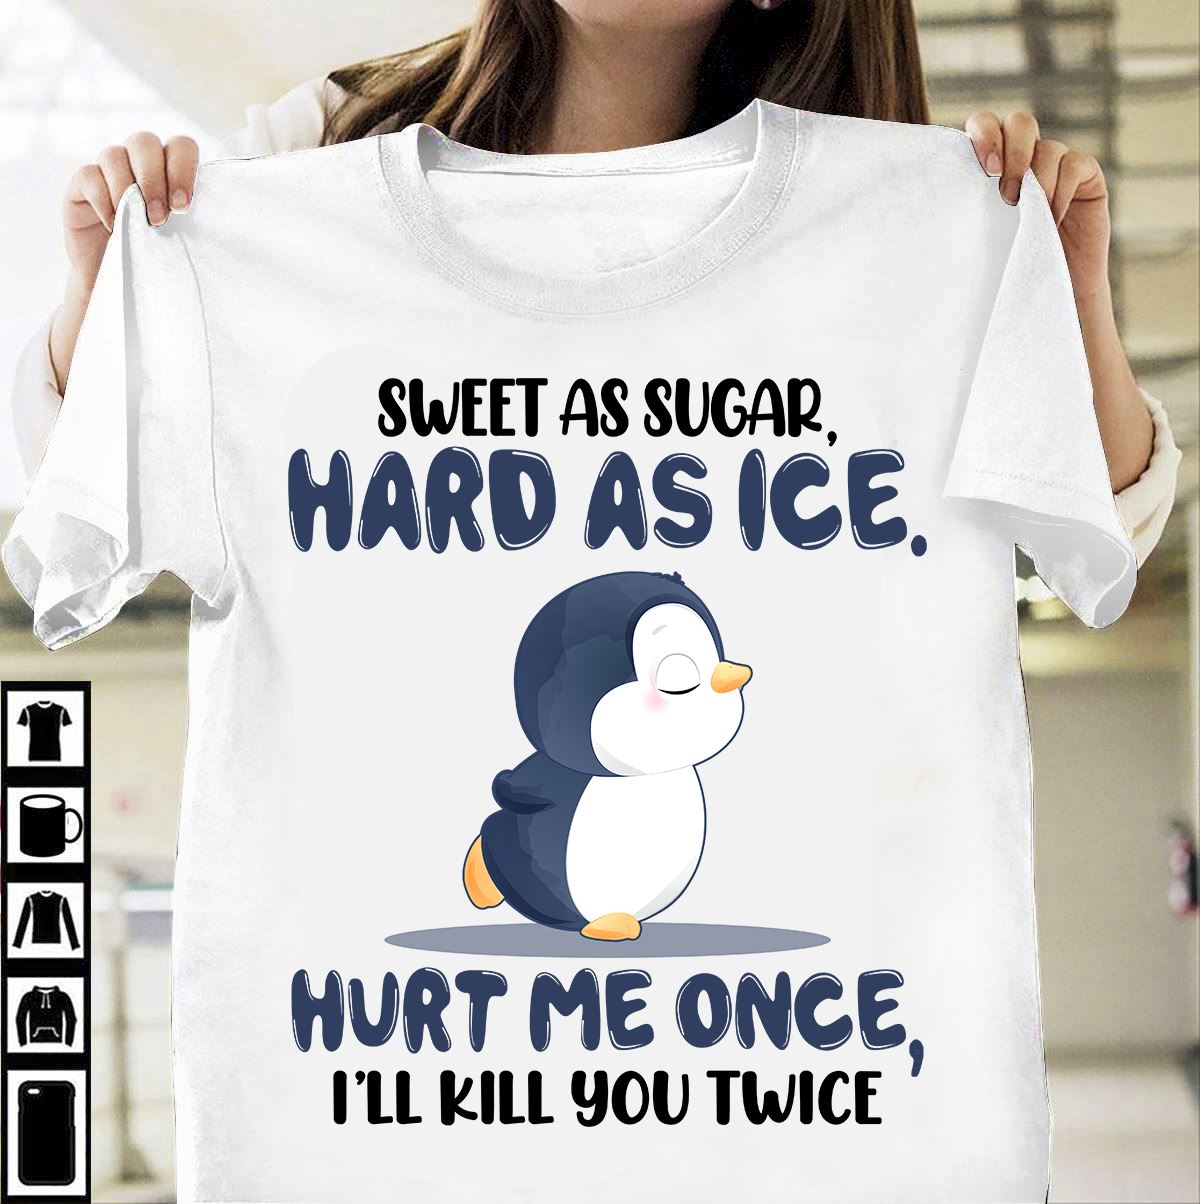 Sweet as sugar hard as ice hurt me once, I'll kill you twice - Penguin